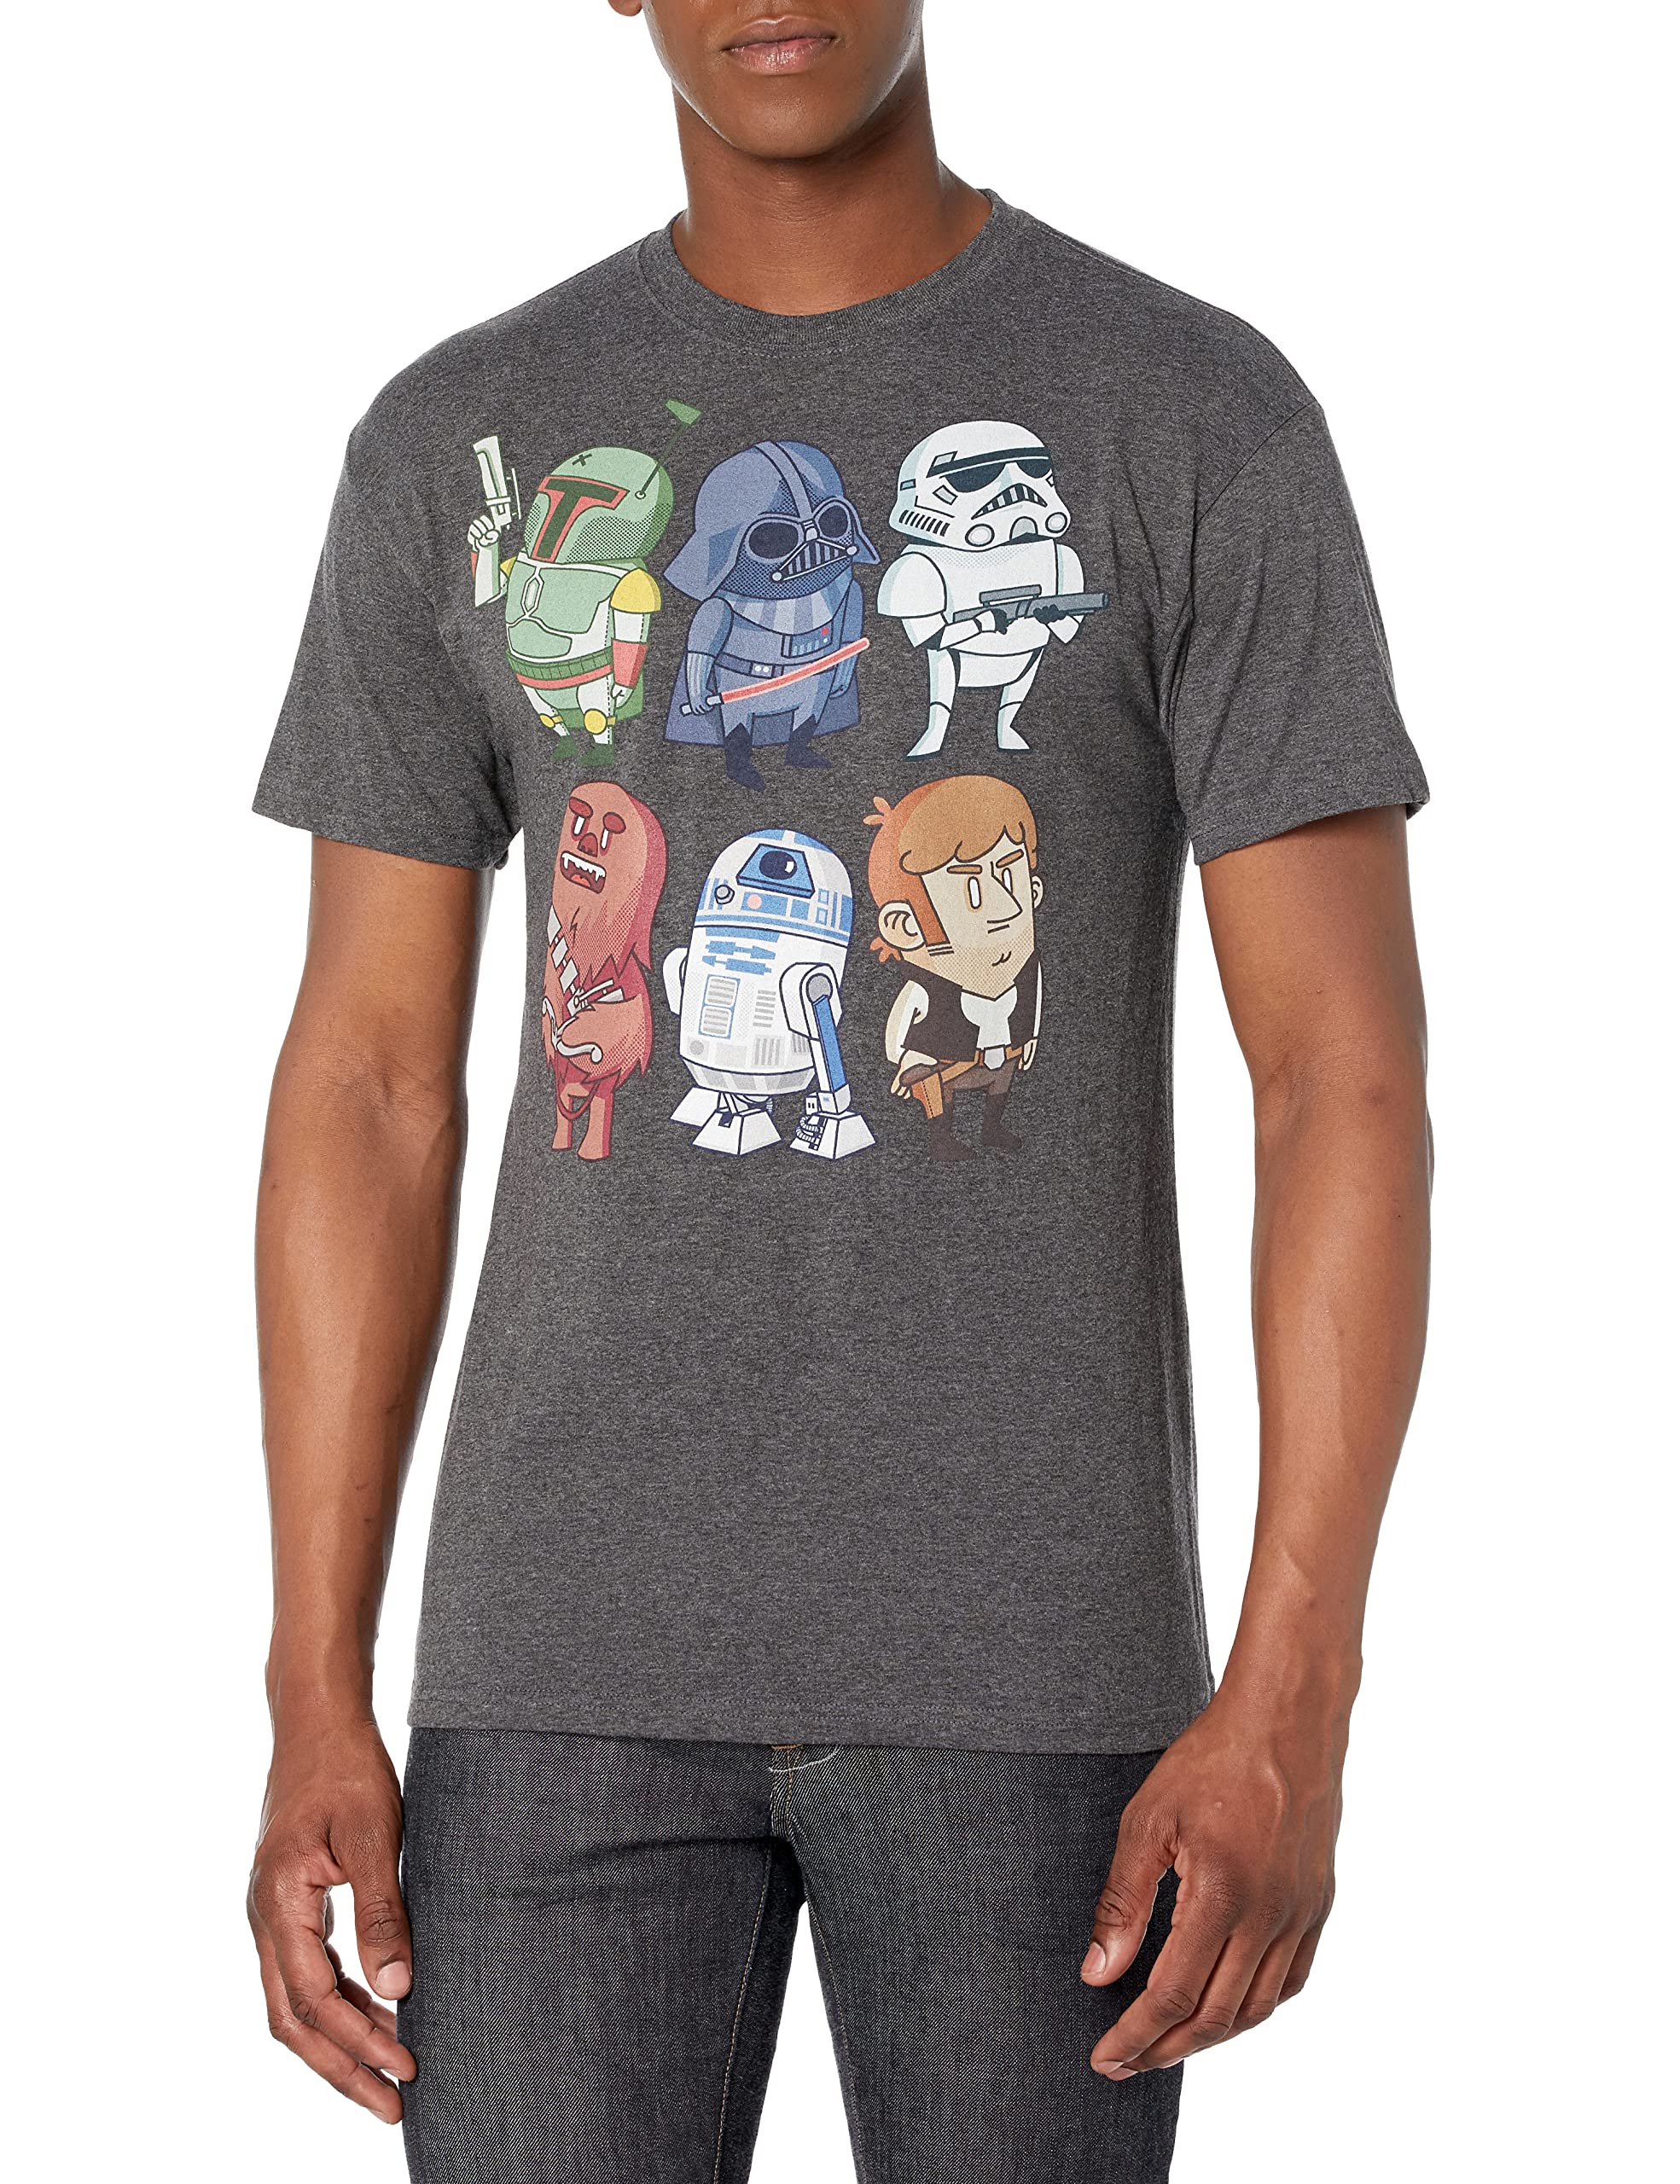 Star Wars Men's Doodles Graphic T-Shirt